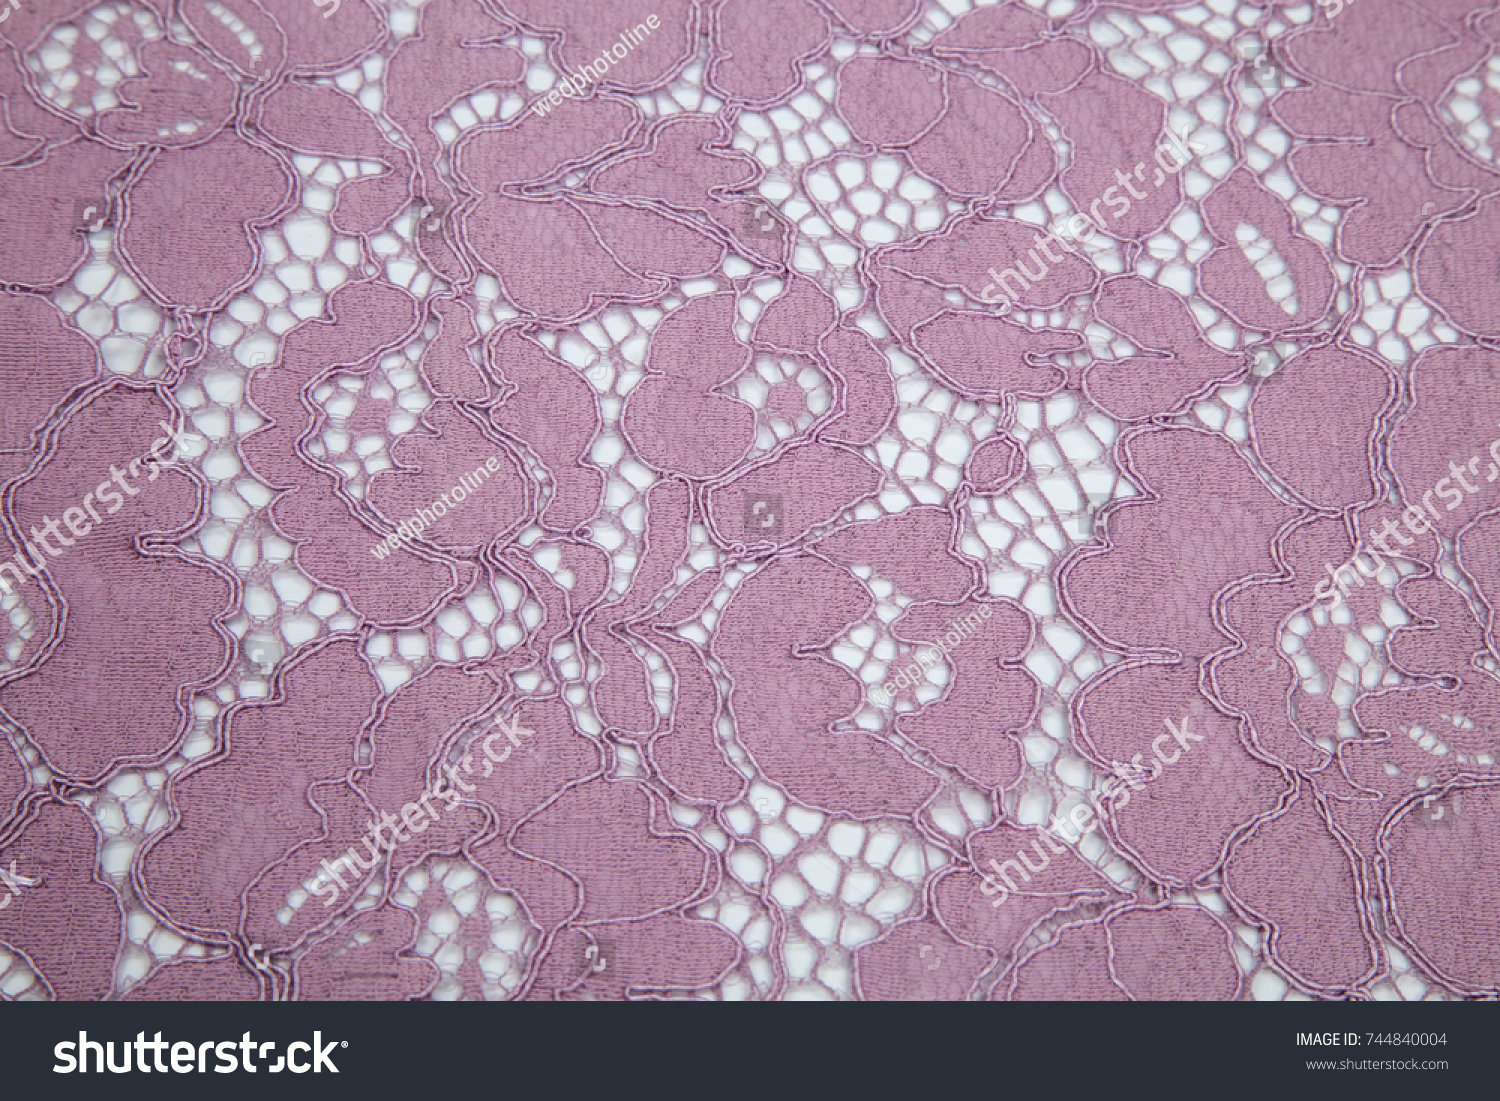 pale pink lace fabric